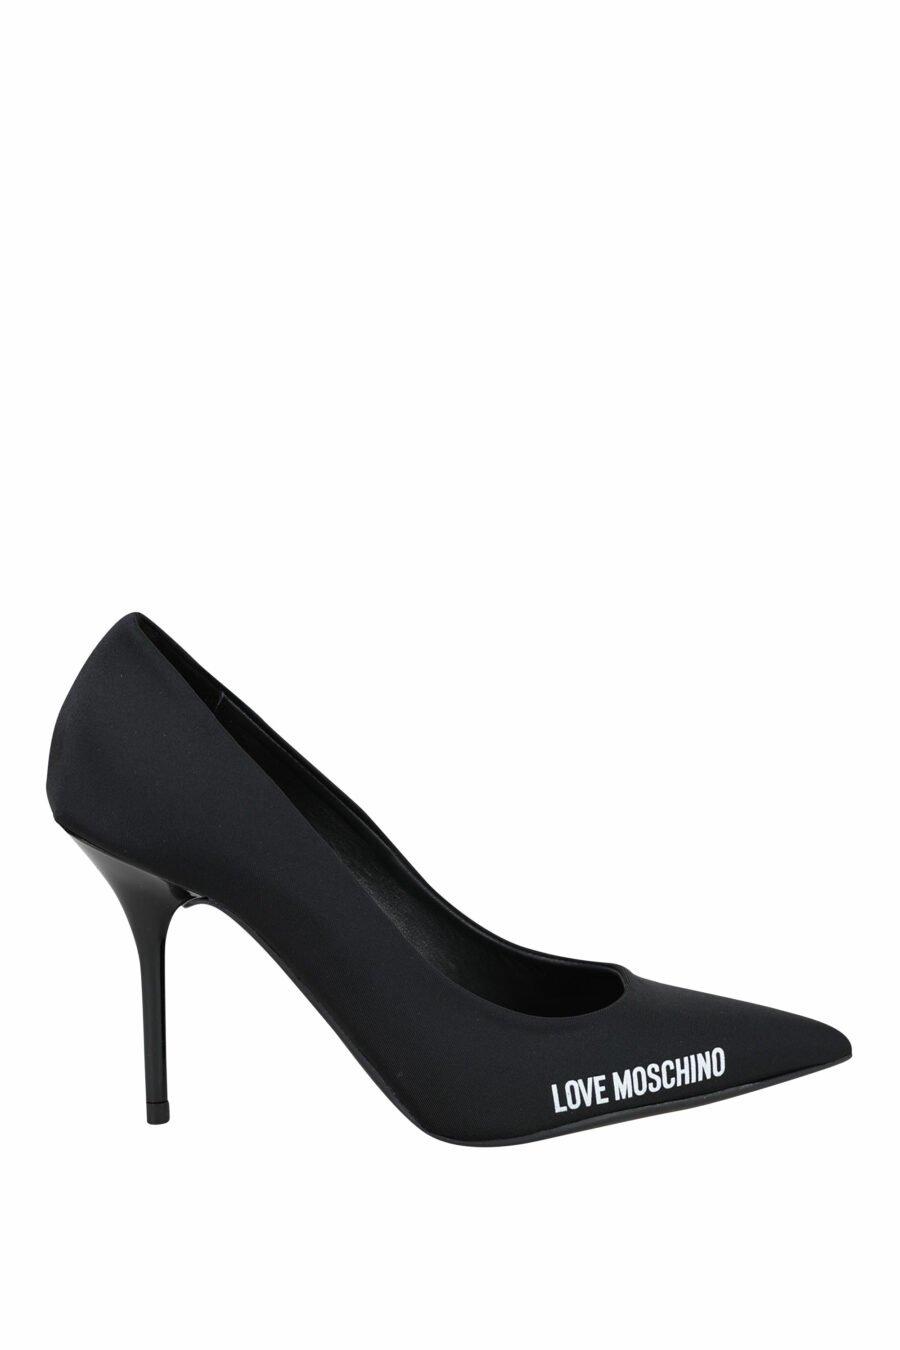 Black heels with mini-logo - 8054653052130